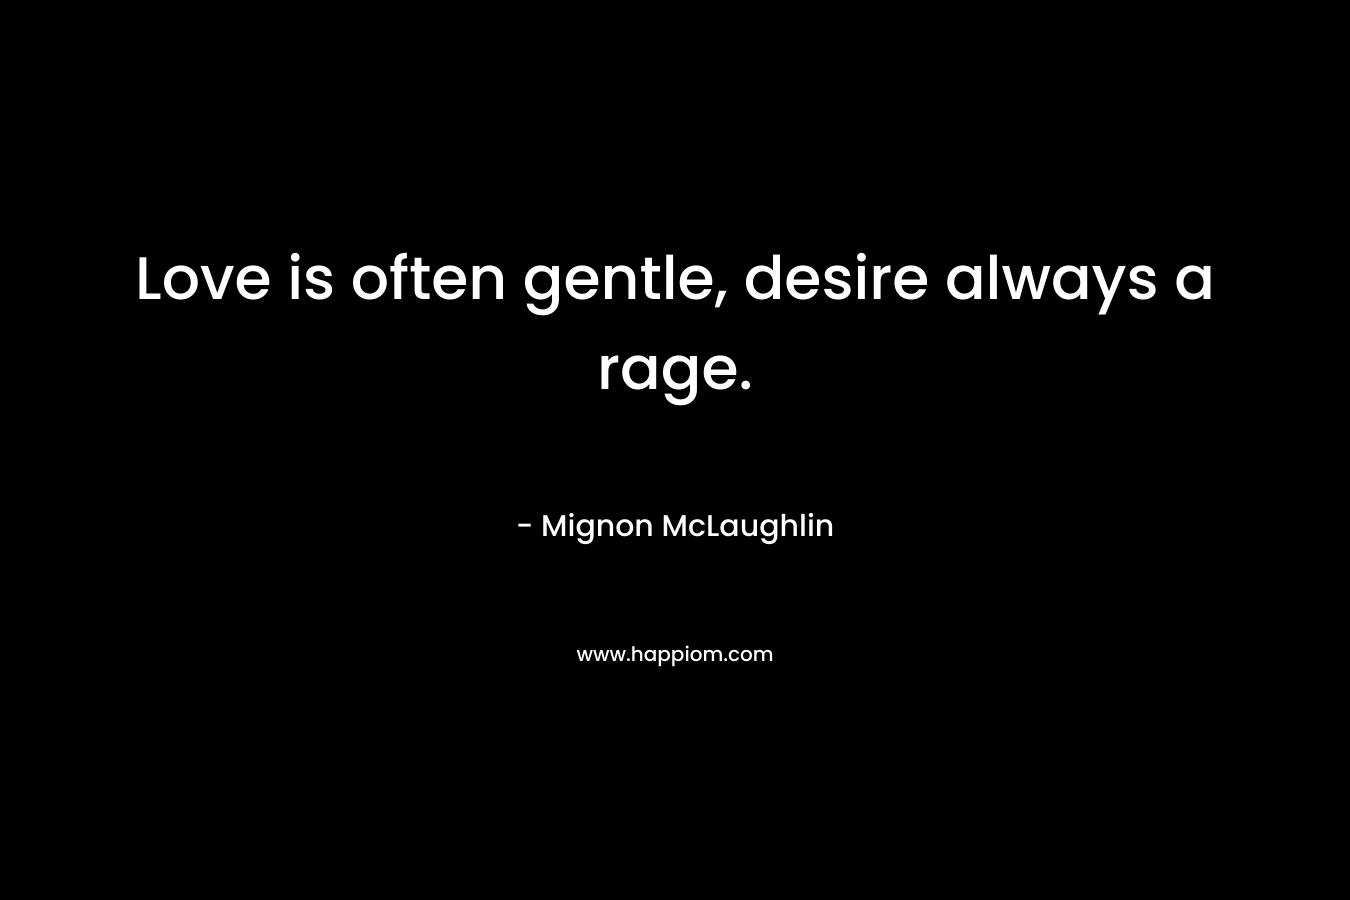 Love is often gentle, desire always a rage.